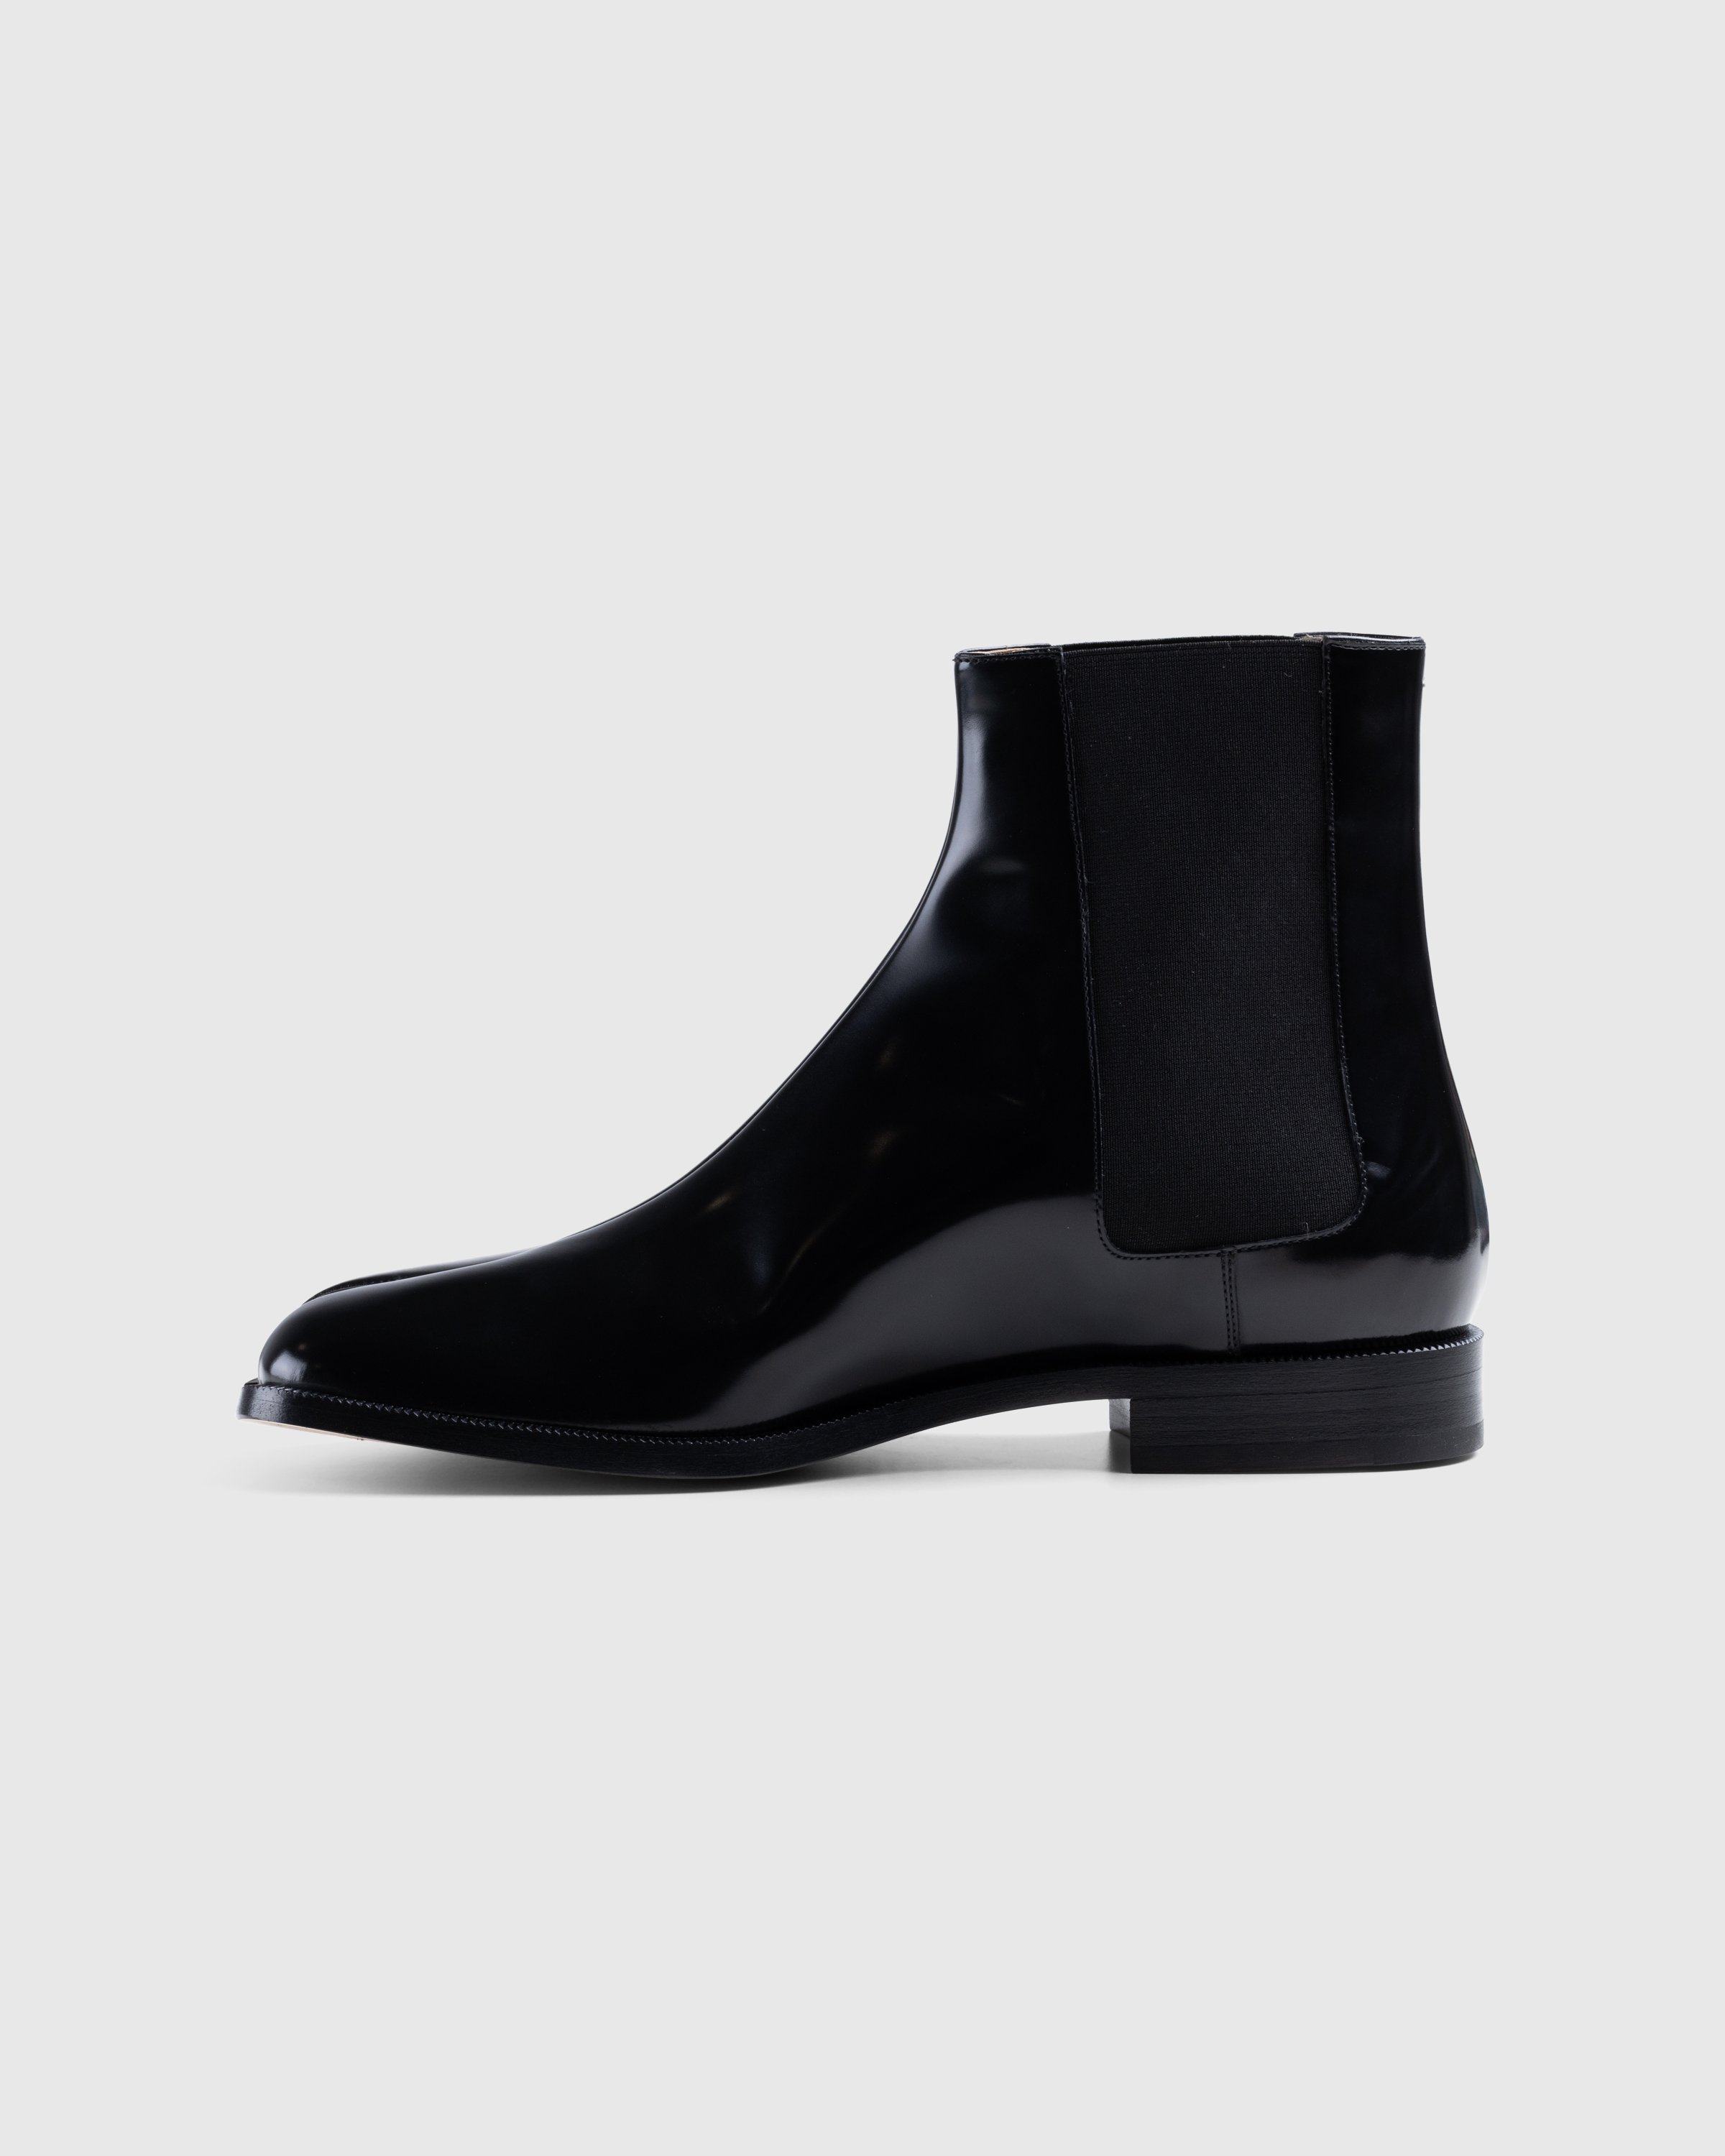 Maison Margiela - ANKLE BOOT Black 3 - Footwear - Black - Image 2